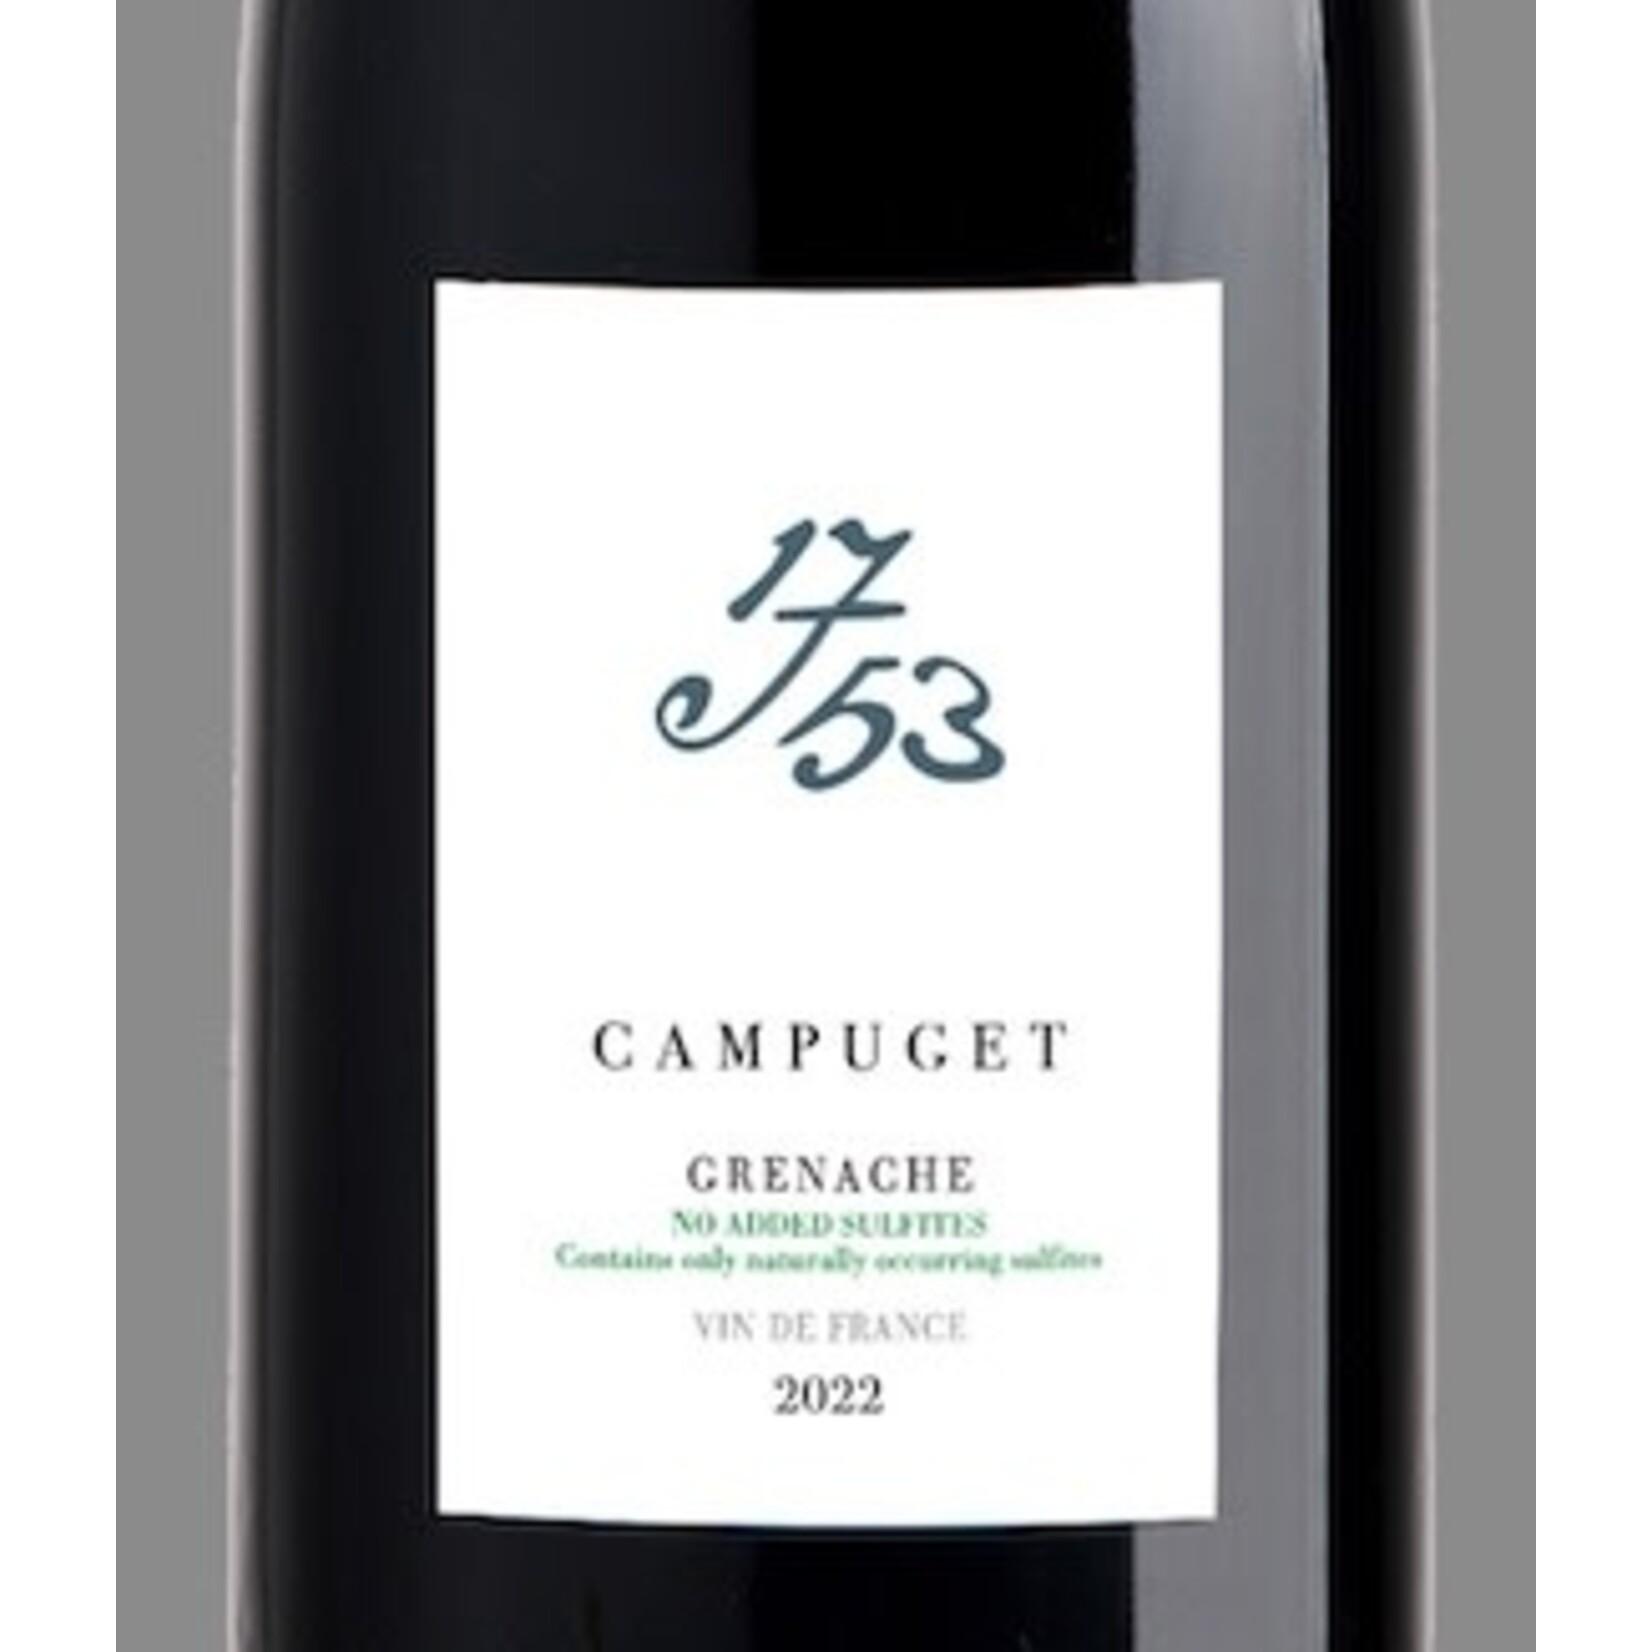 Wine Chateau de Campuget 1753 Costieres de Nimes Grenache 2022